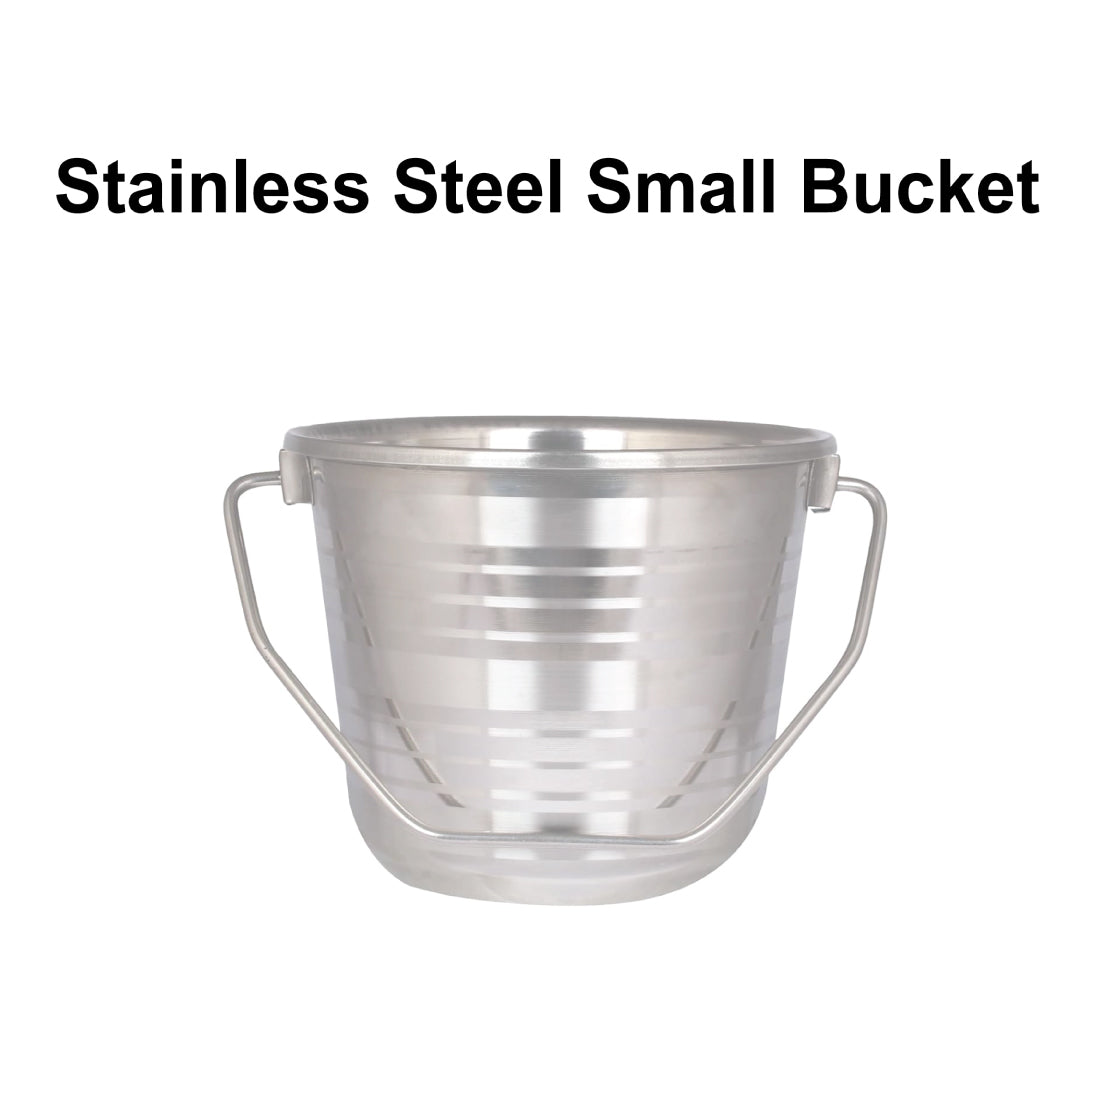 Stainless Steel Small Bucket